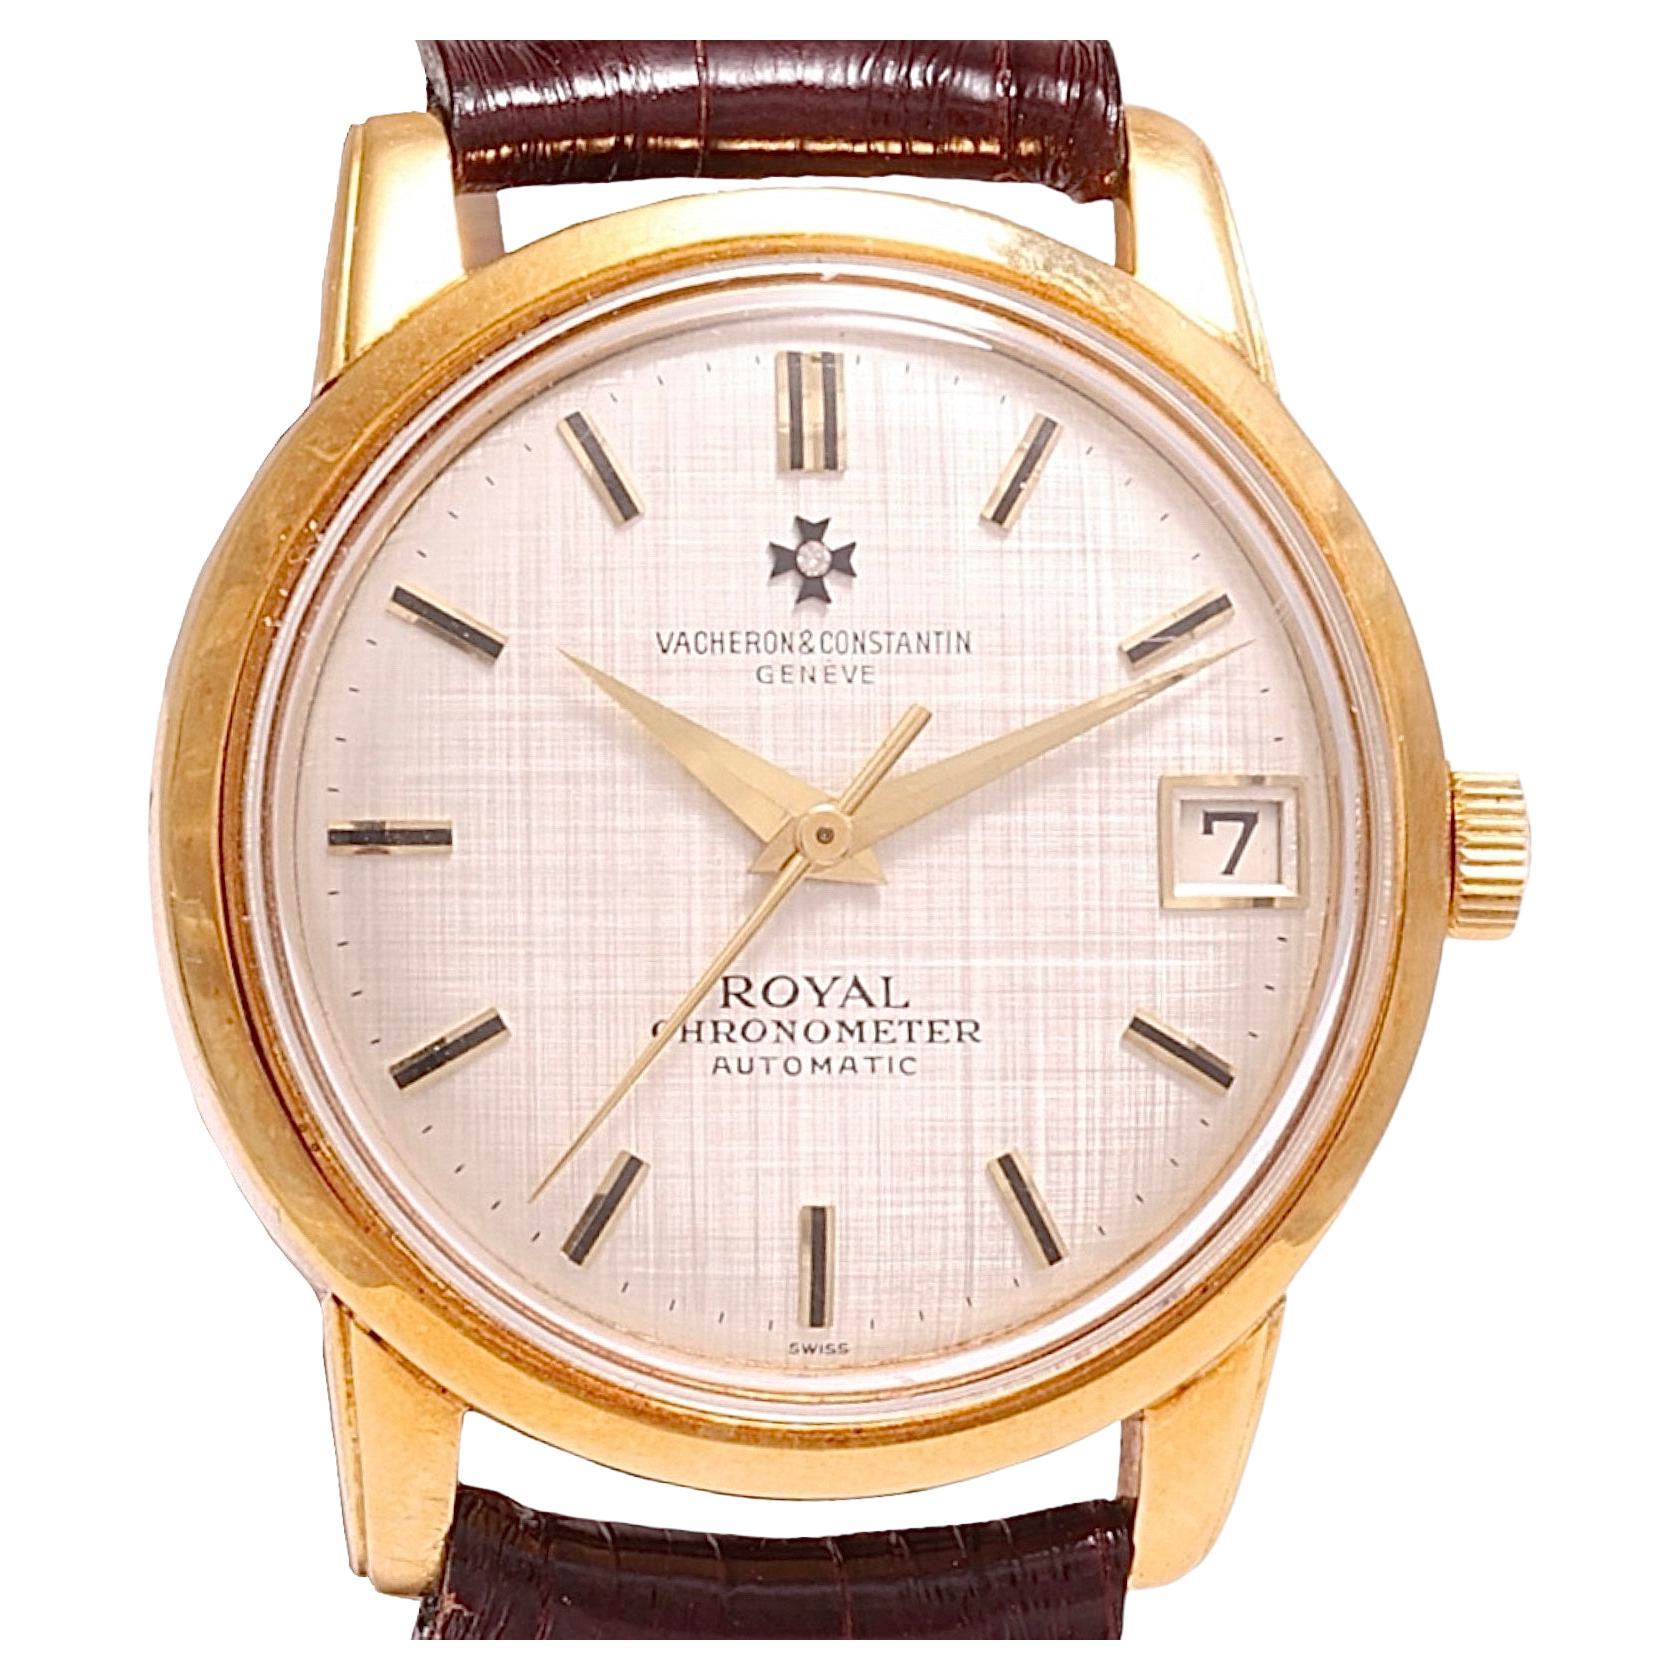 Vacheron Constantin Chronometre Royal Wrist Watch